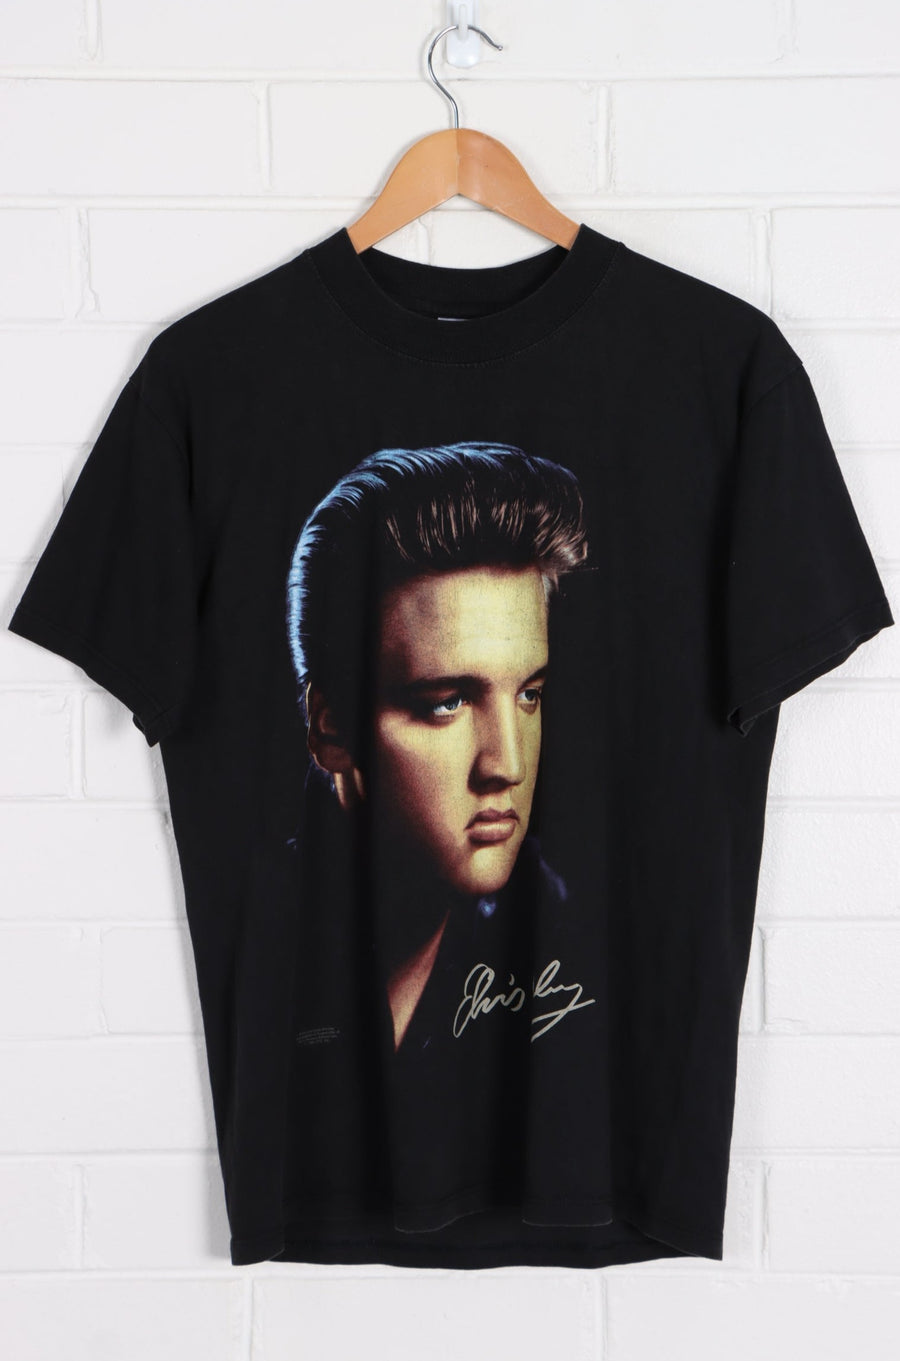 Elvis Presley Portrait & Signature T-Shirt Canada Made (M)